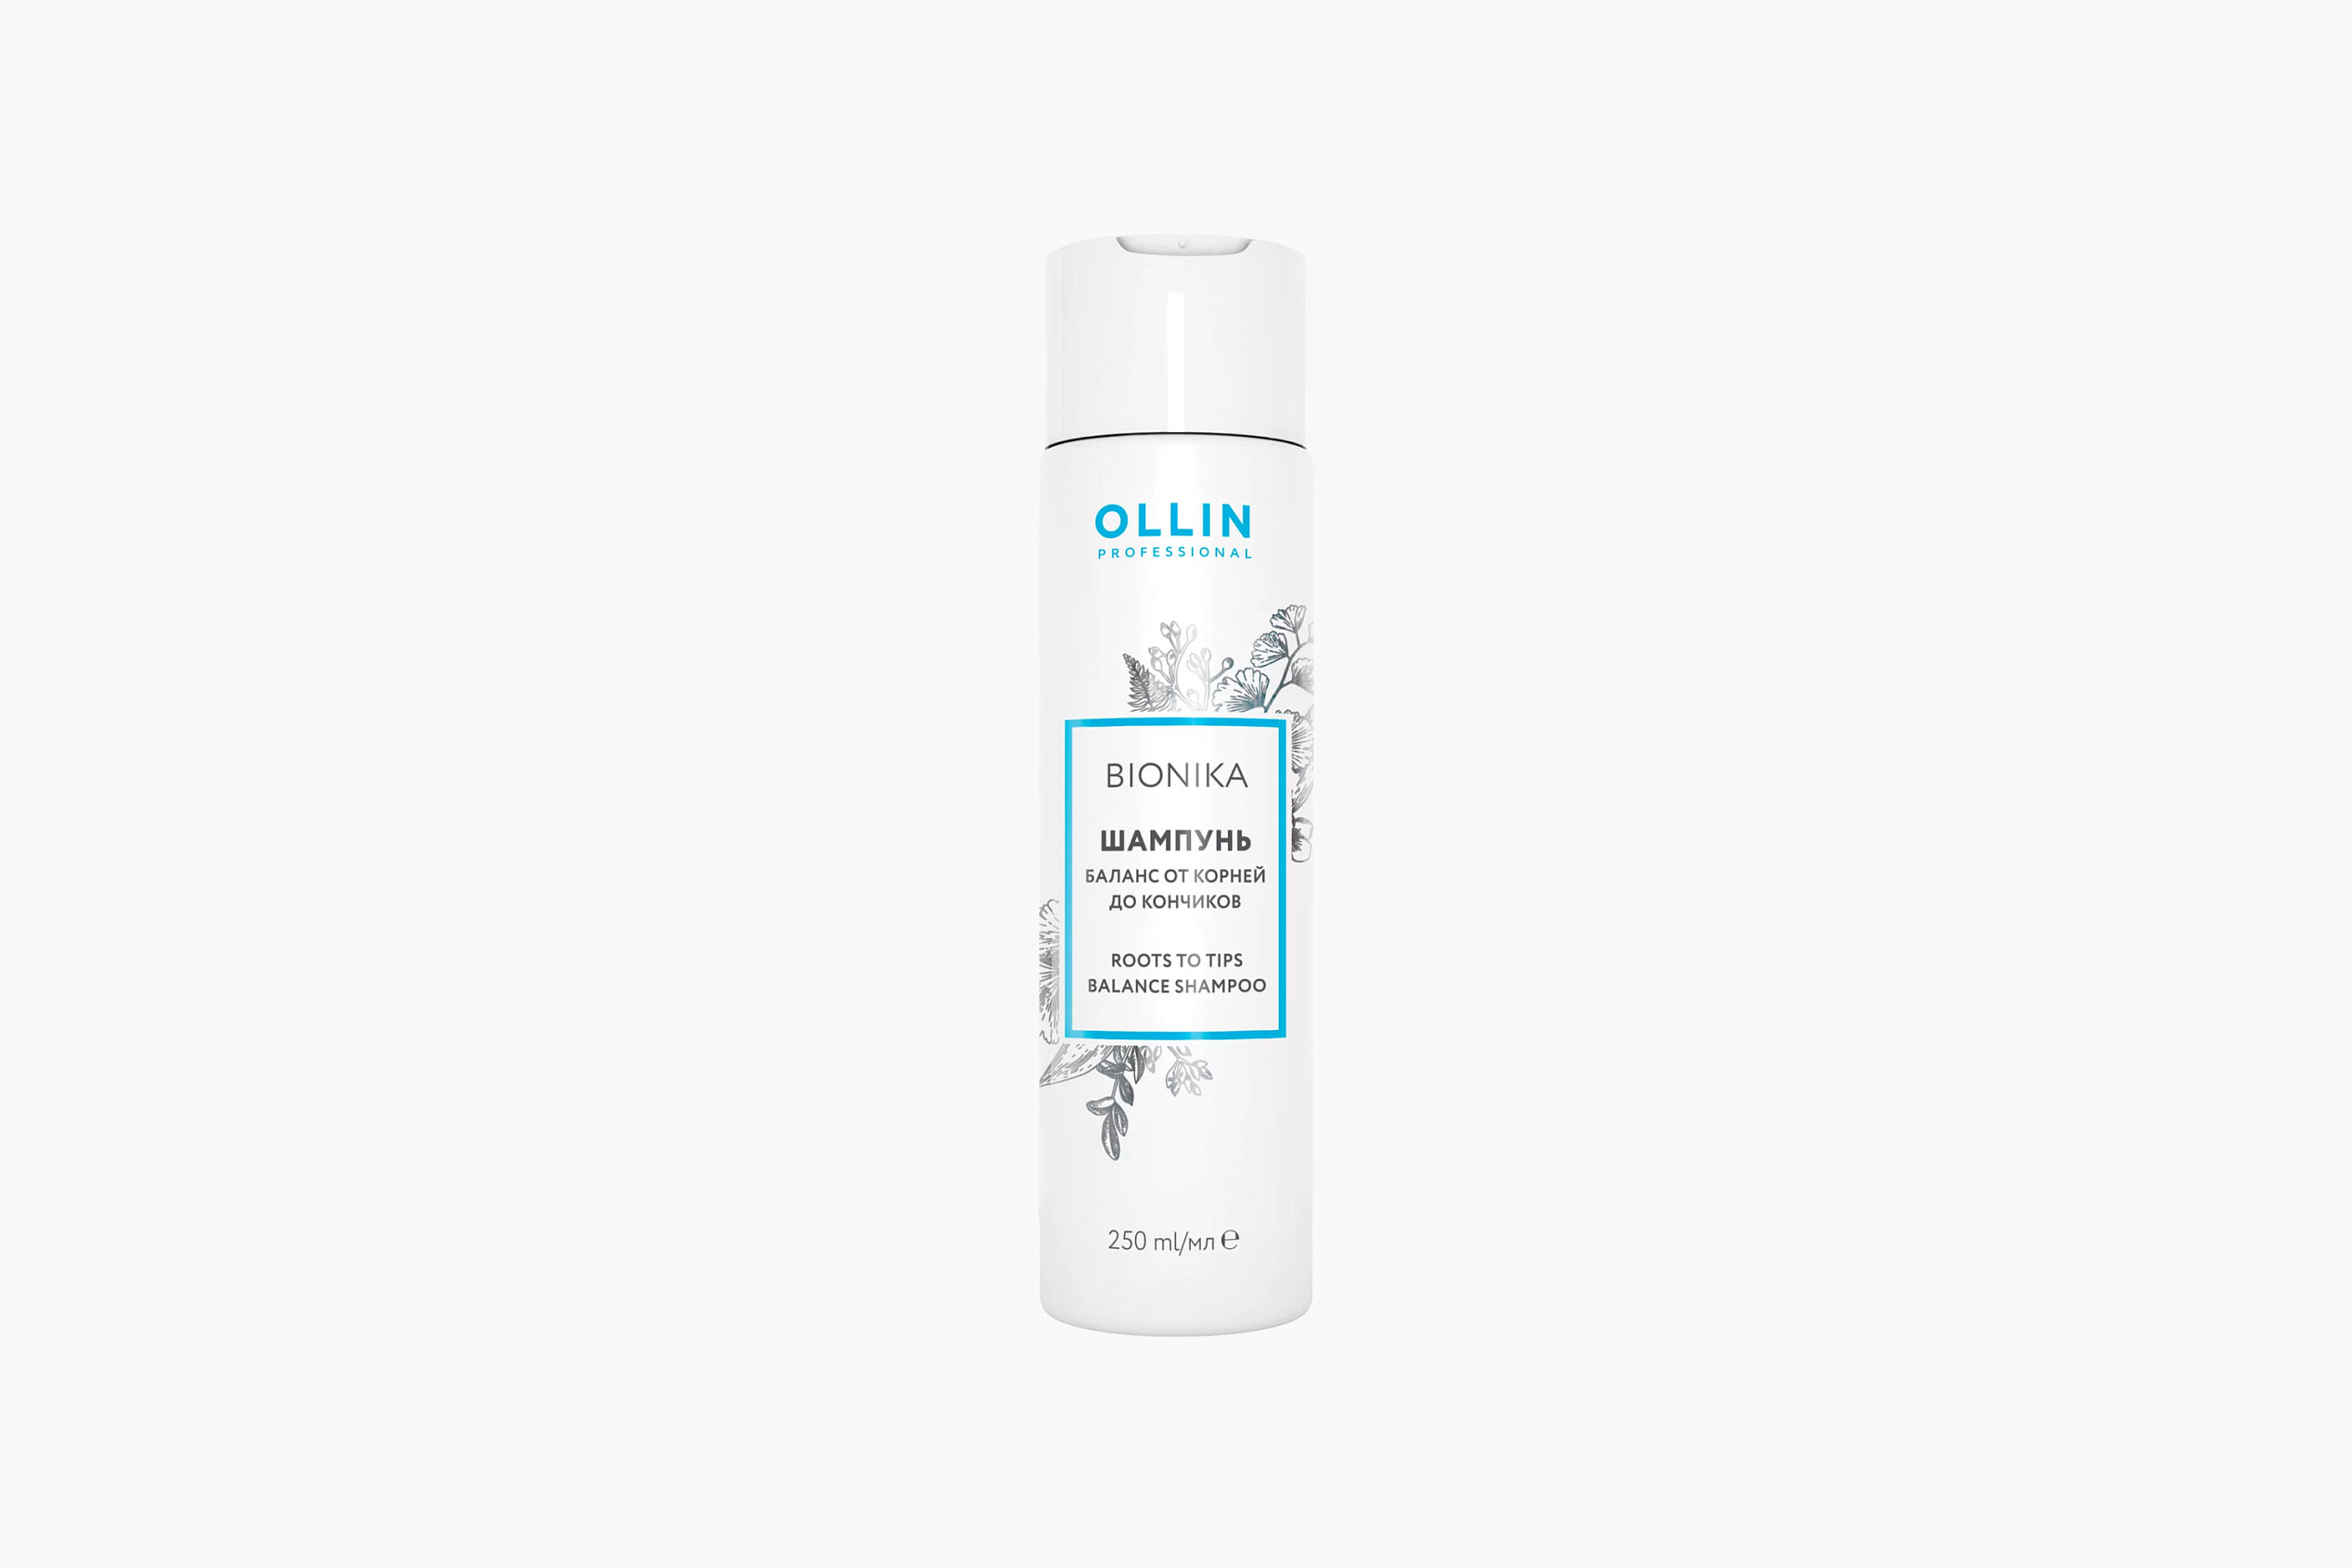 Ollin Professional Bionika Roots To Tips Balance Shampoo фото 1